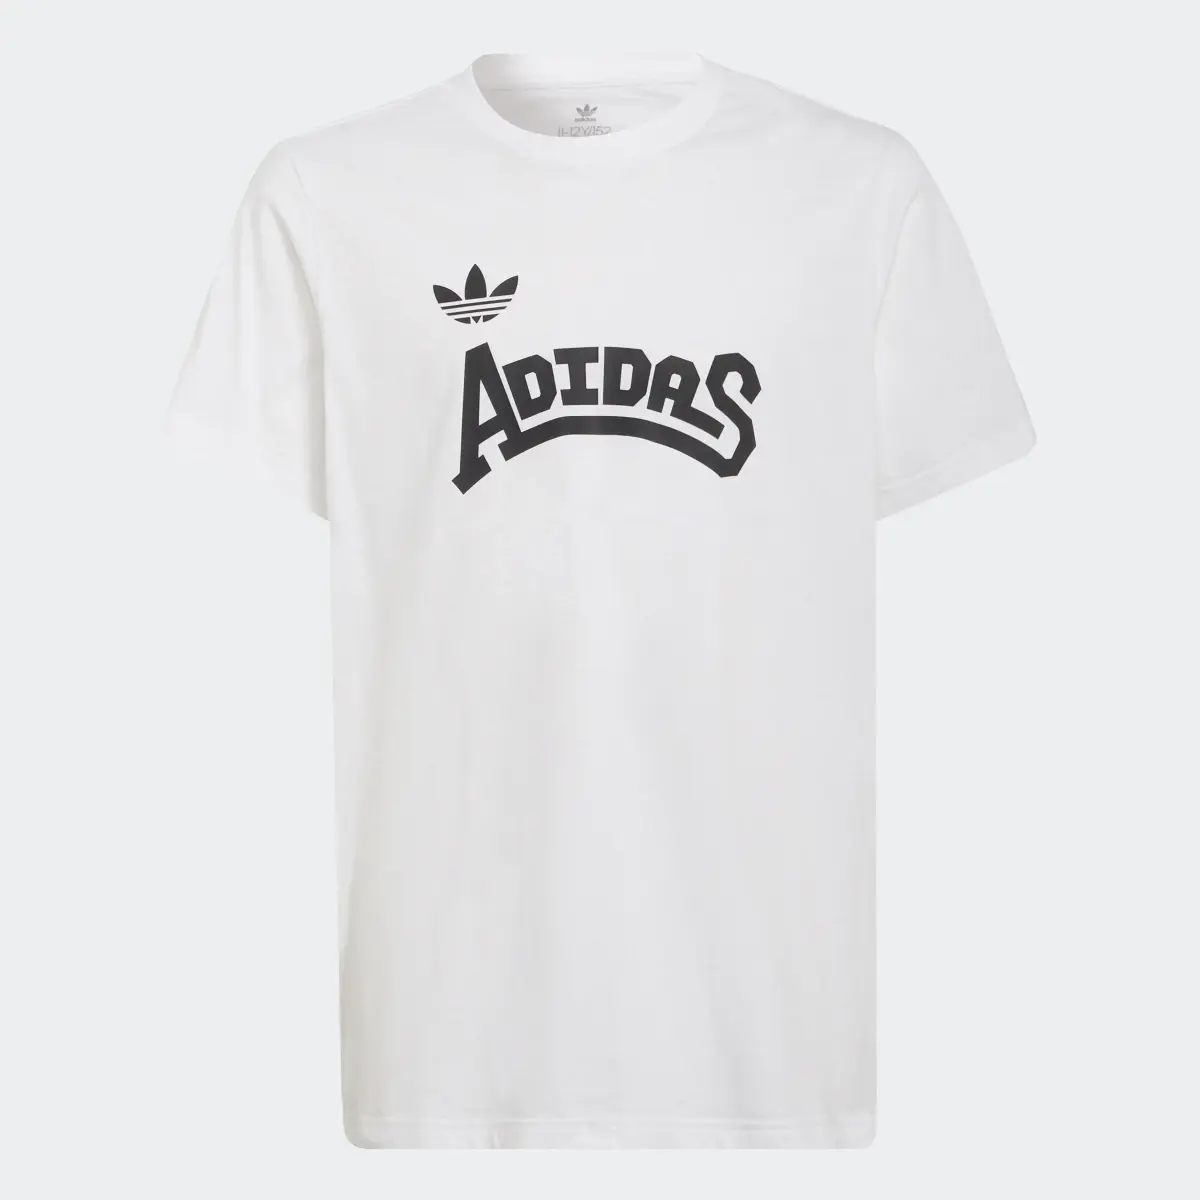 Adidas T-shirt. 1